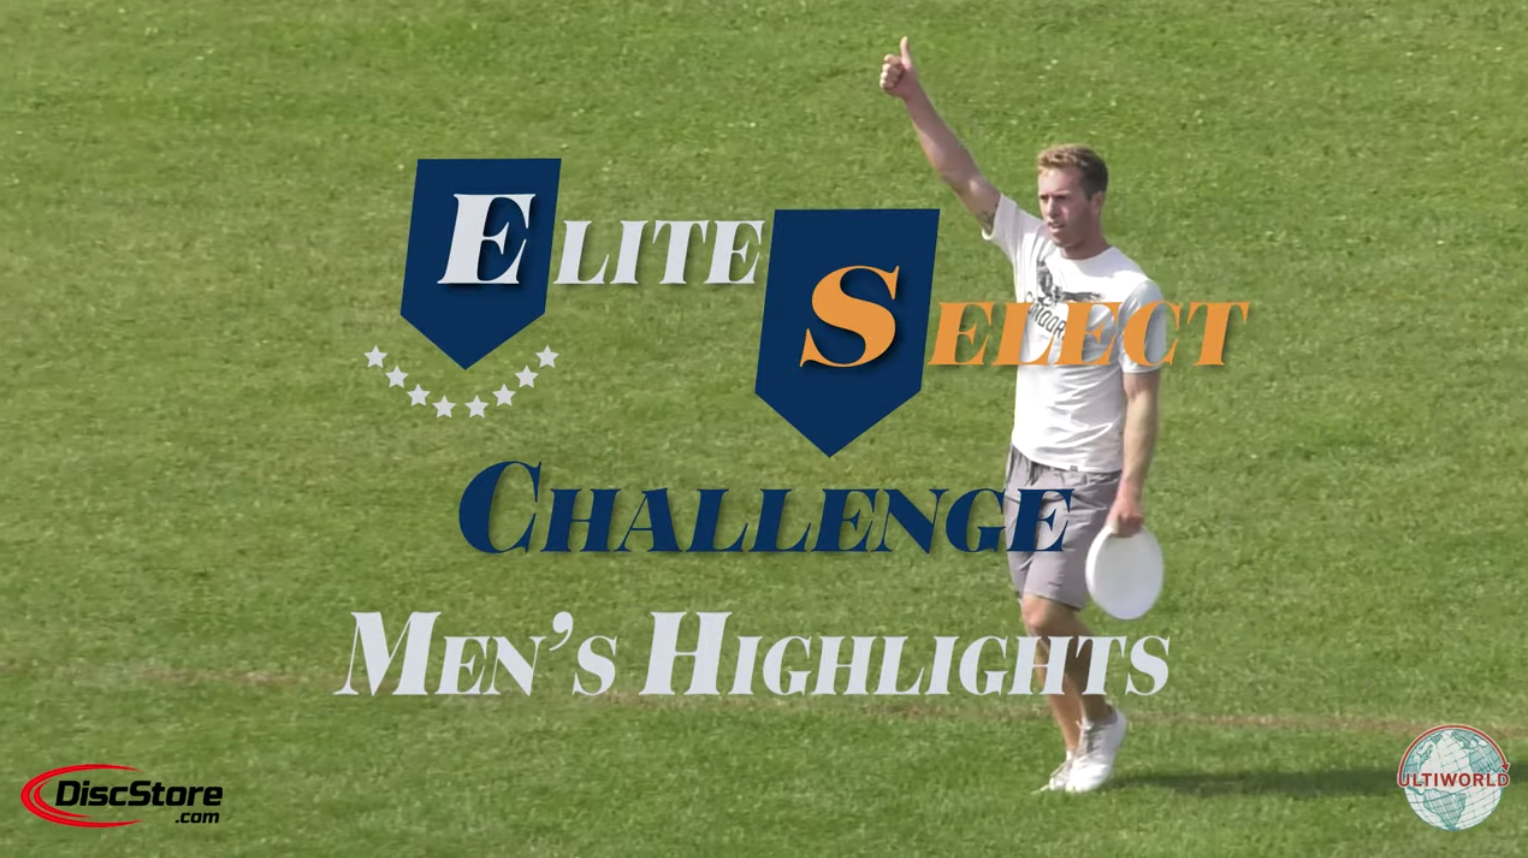 EliteSelect Challenge 2019 Men’s Highlights Ultiworld